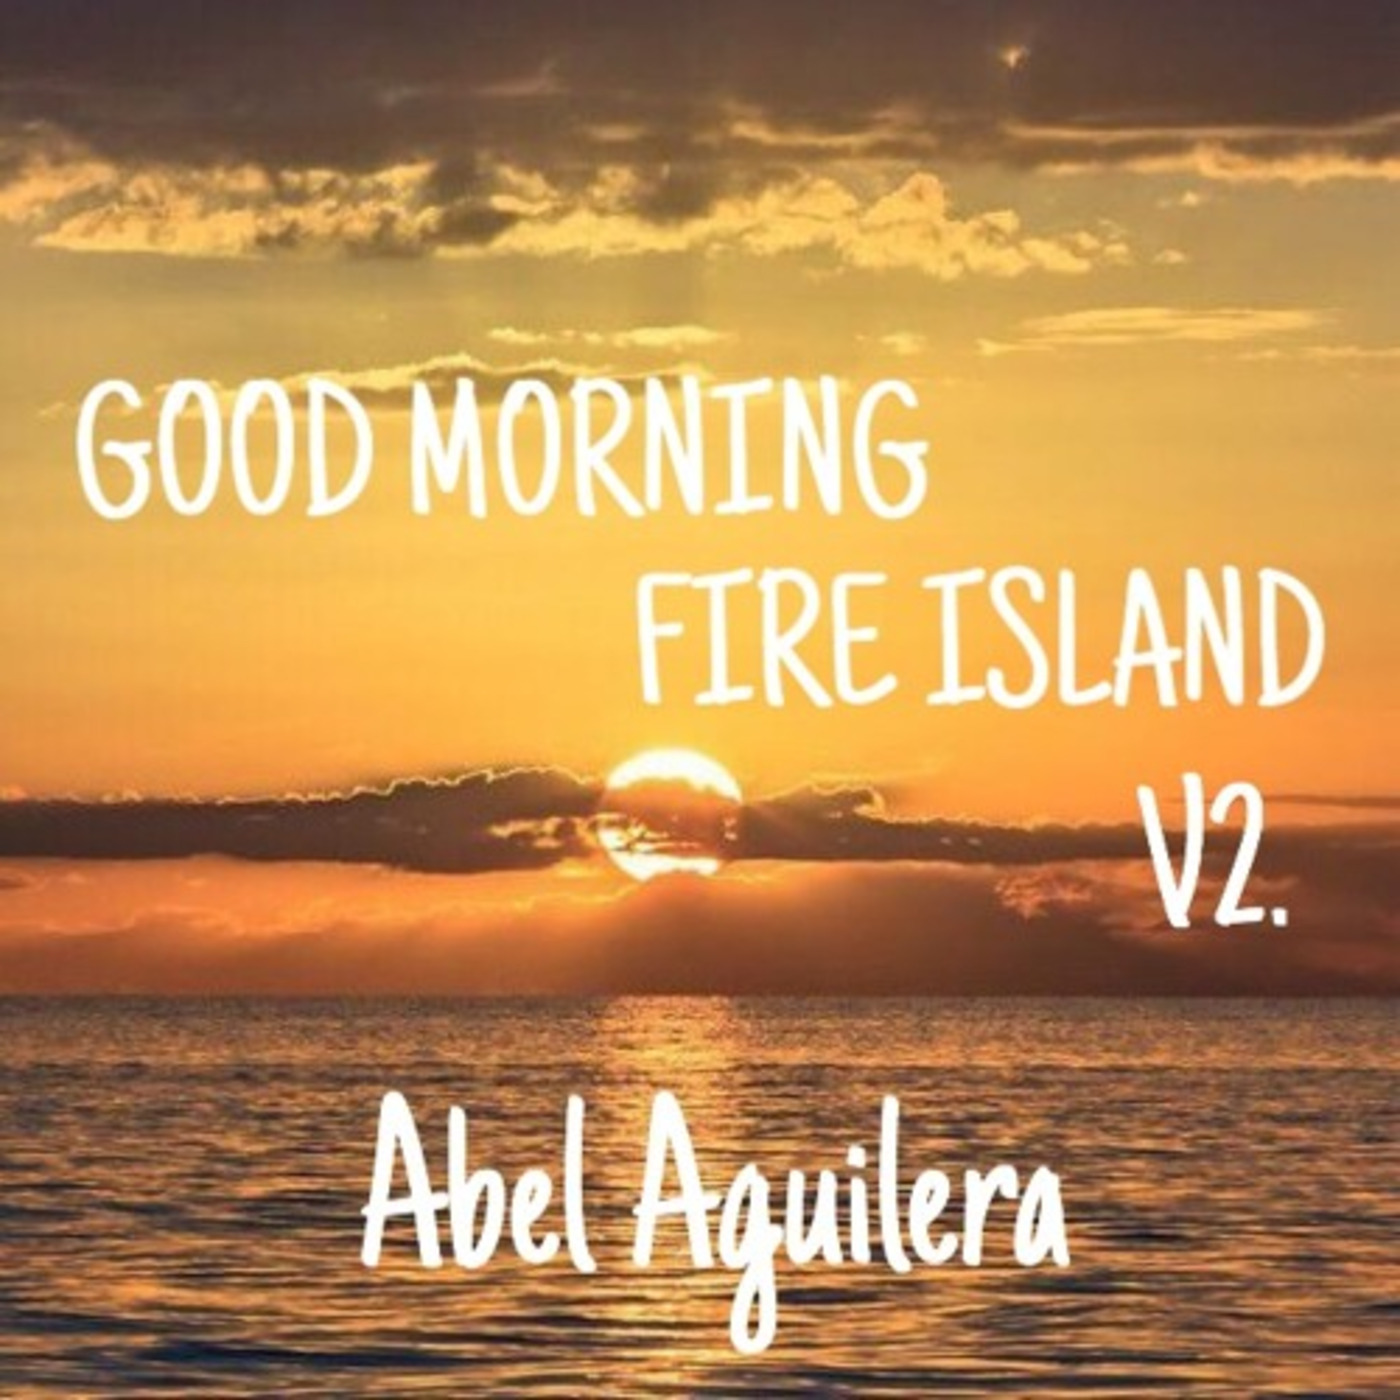 GOOD MORNING FIRE ISLAND V2. 2018